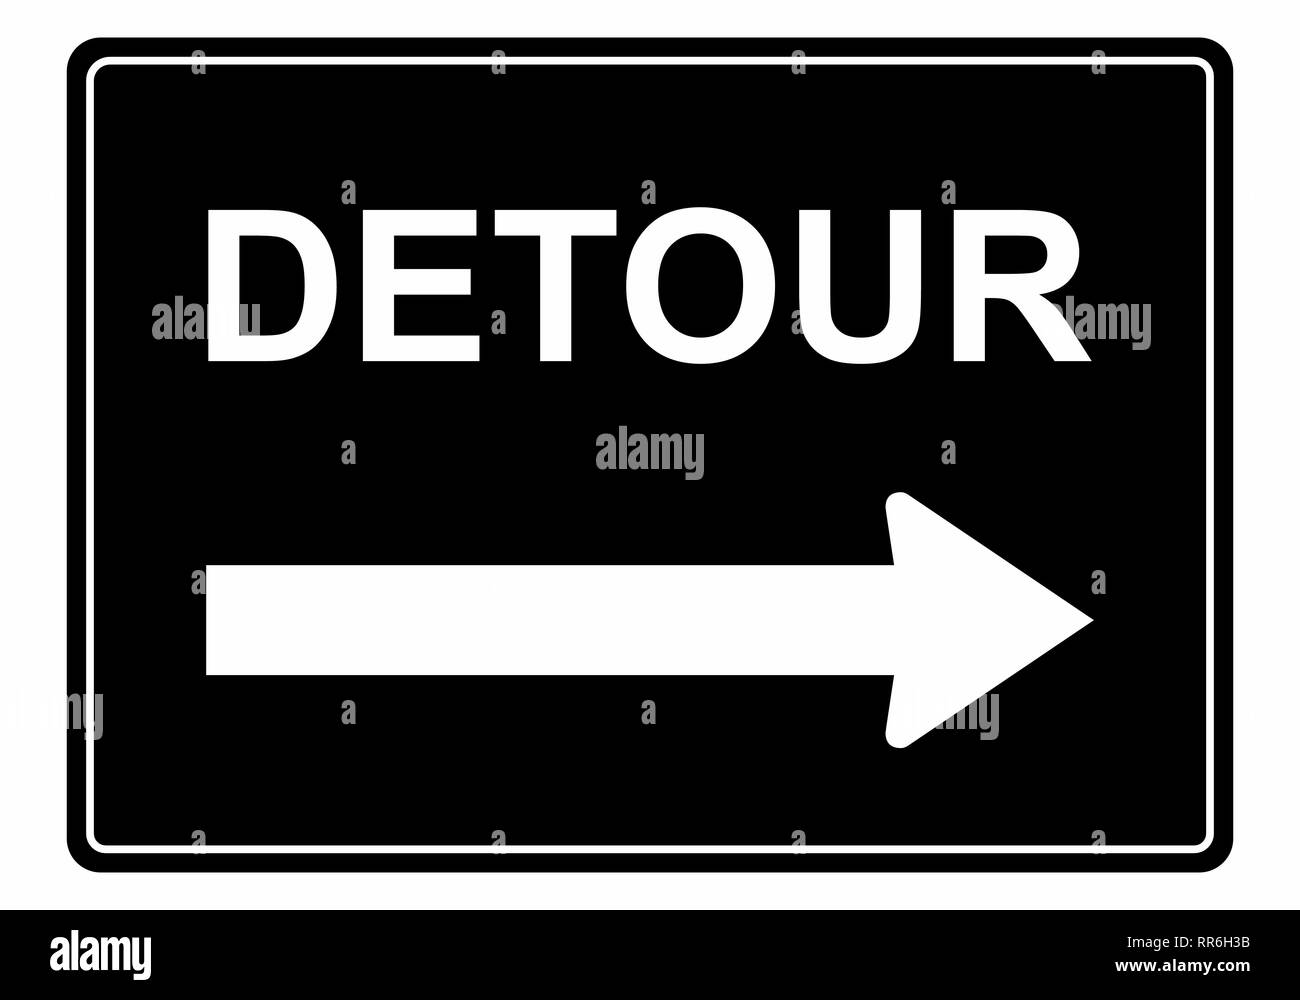 The Detour Sign. Black and white illustration. Stock Vector